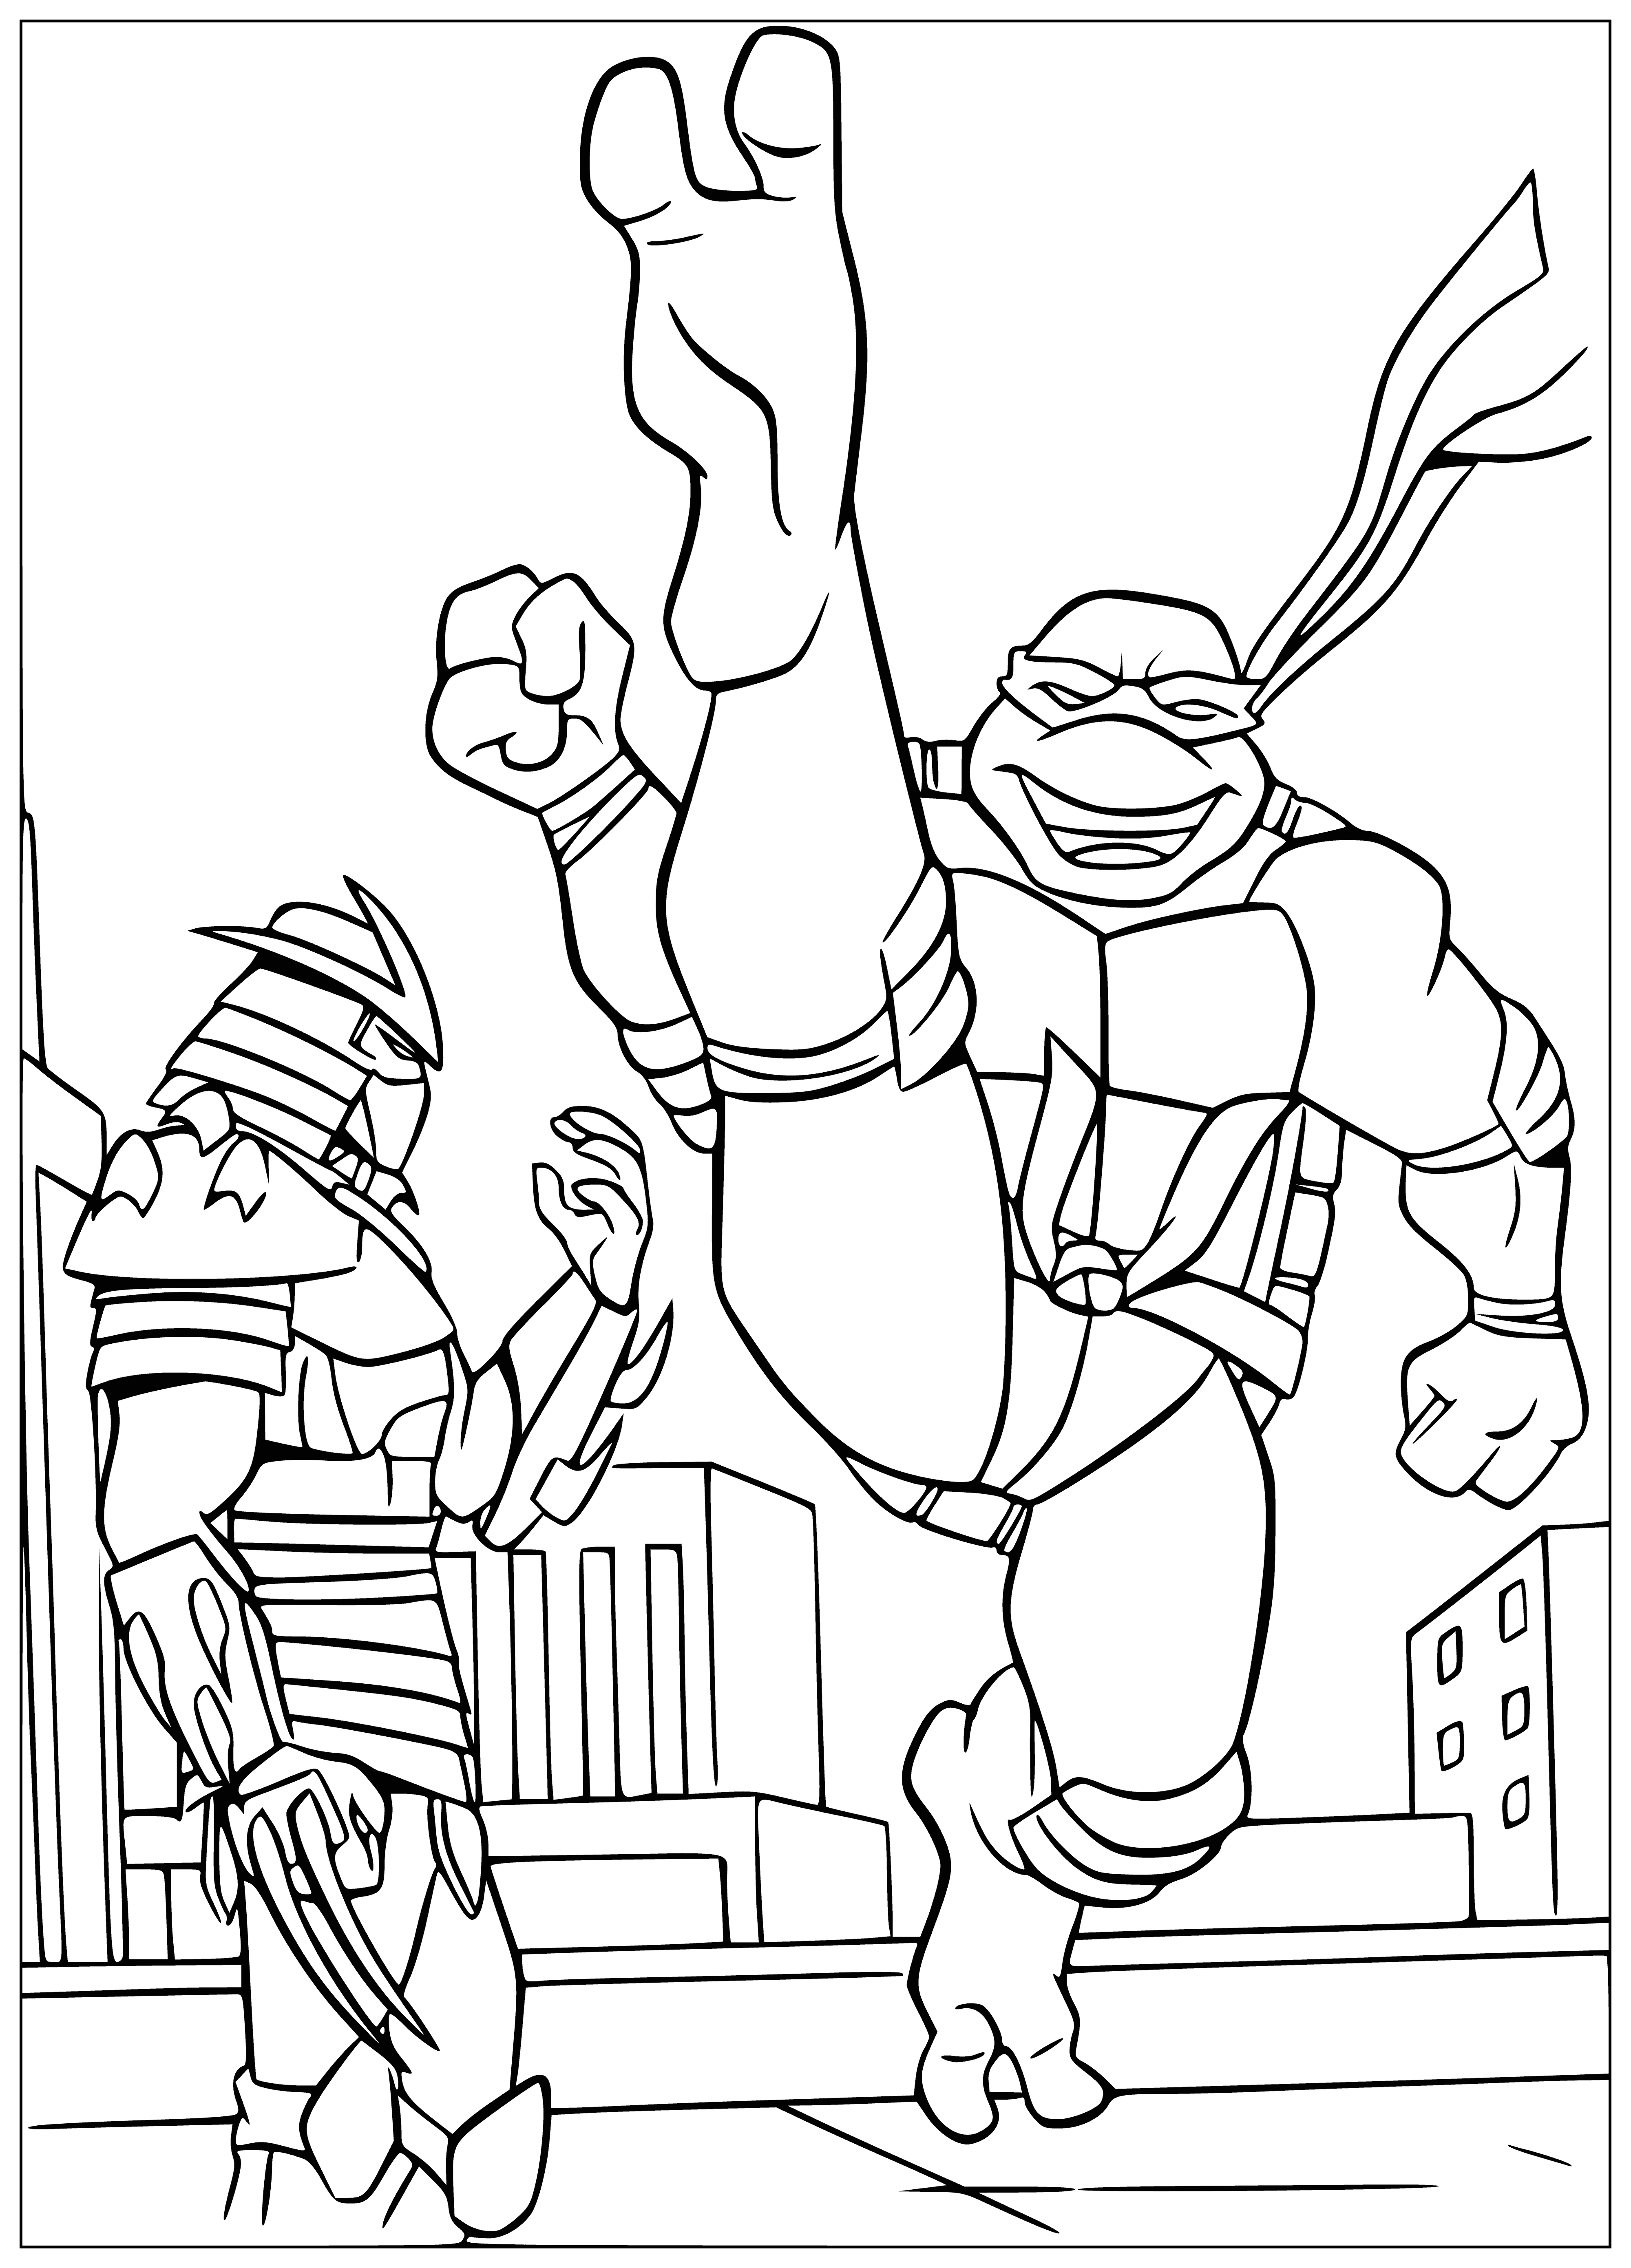 Shredder and Ninja coloring page